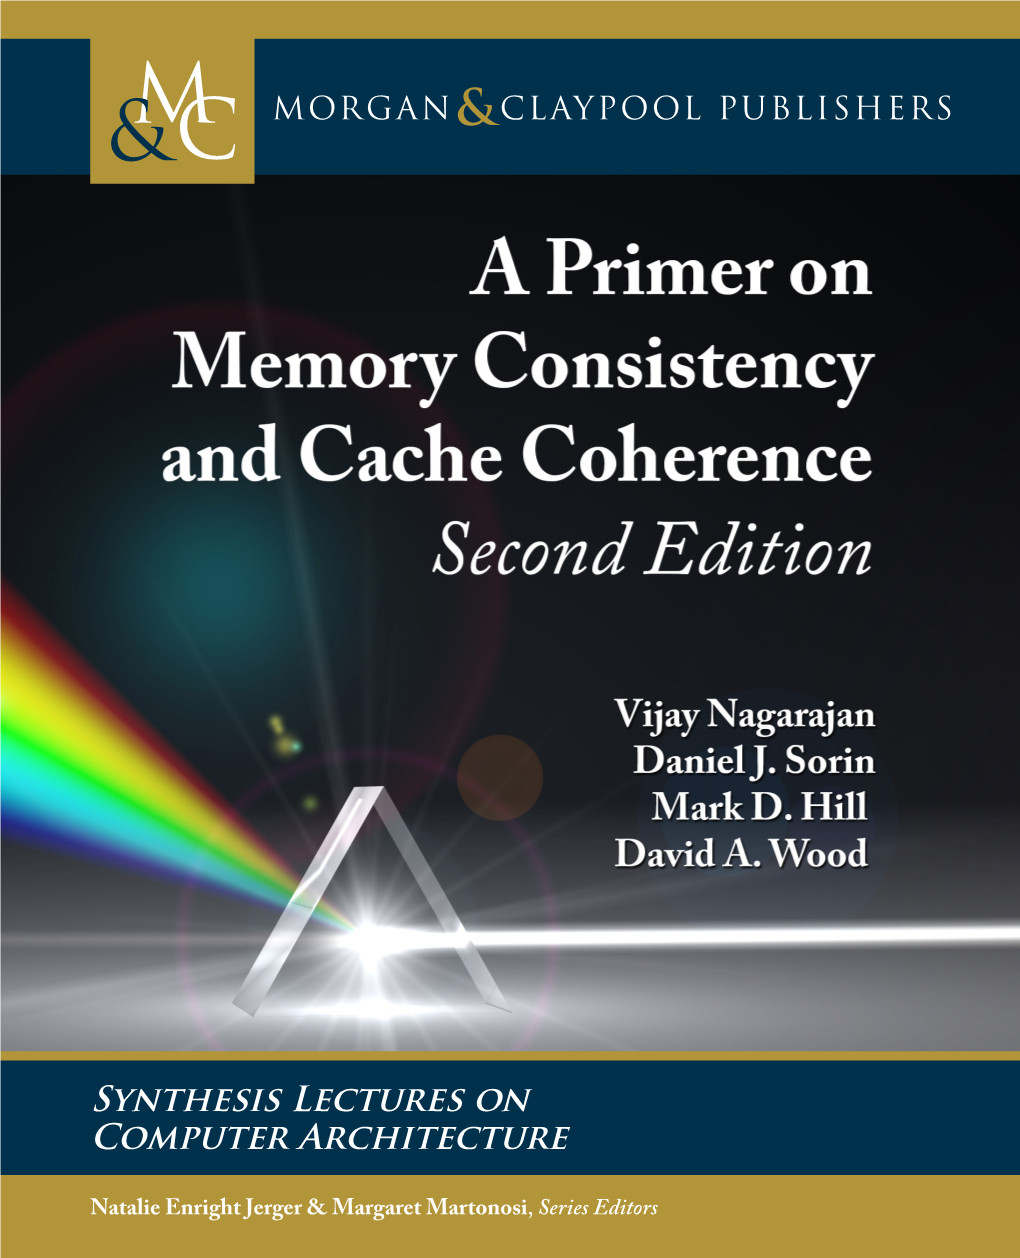 A Primer on Memory Consistency and Cache Coherence, Second Edition Vijay Nagarajan, Daniel J